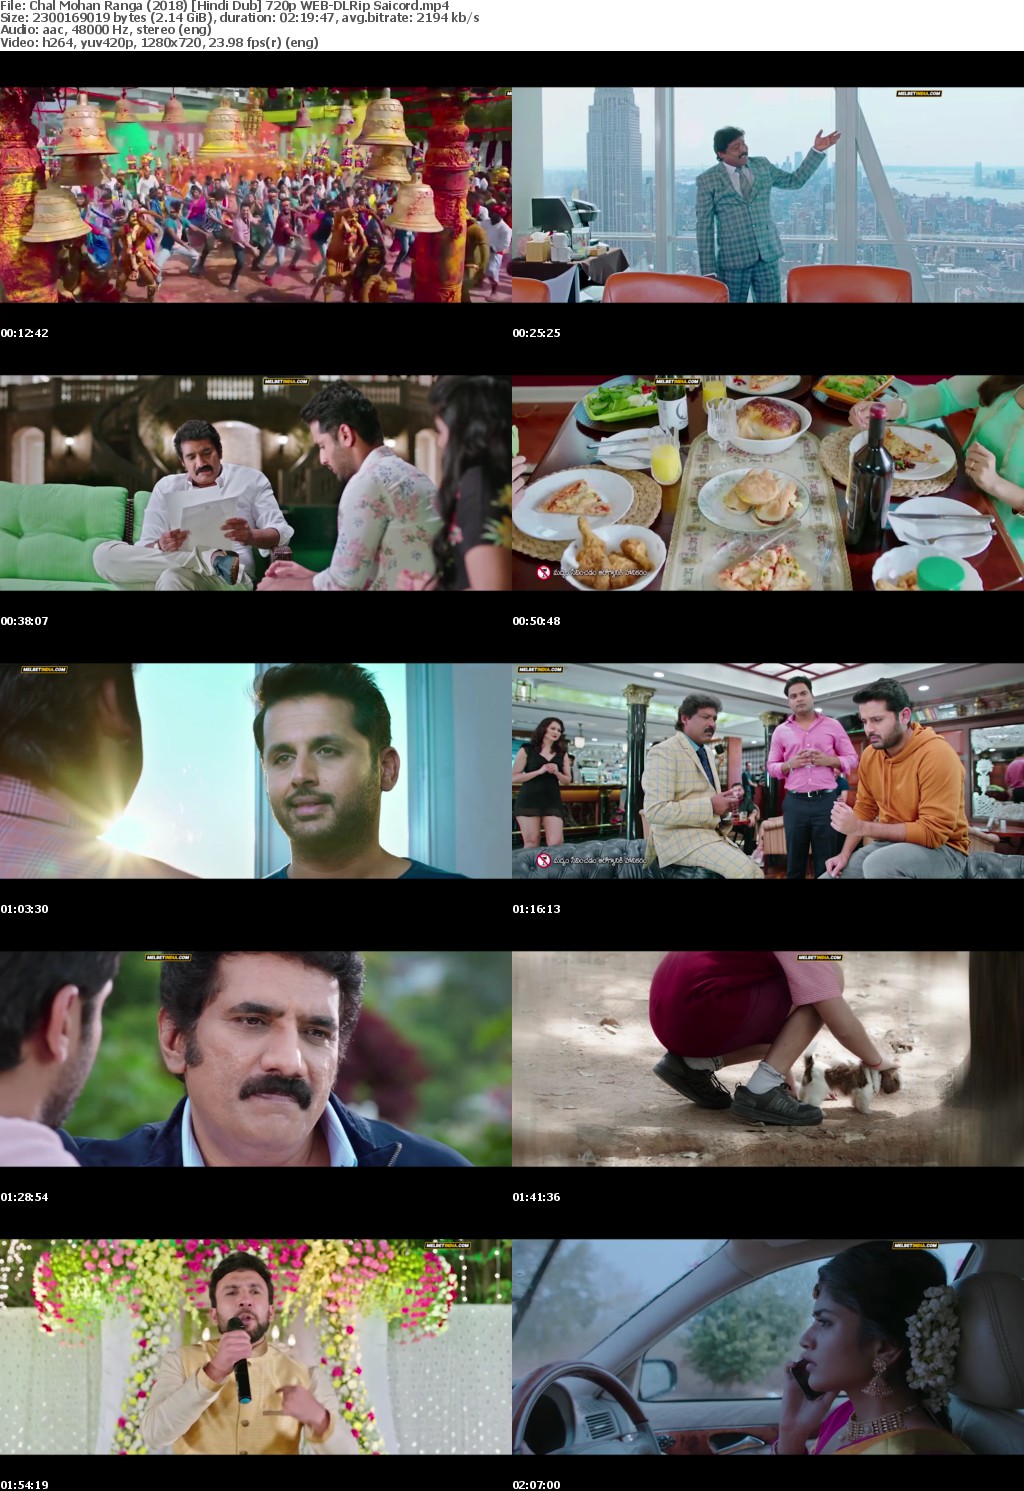 Chal Mohan Ranga (2018) Hindi Dub 720p WEB-DLRip Saicord